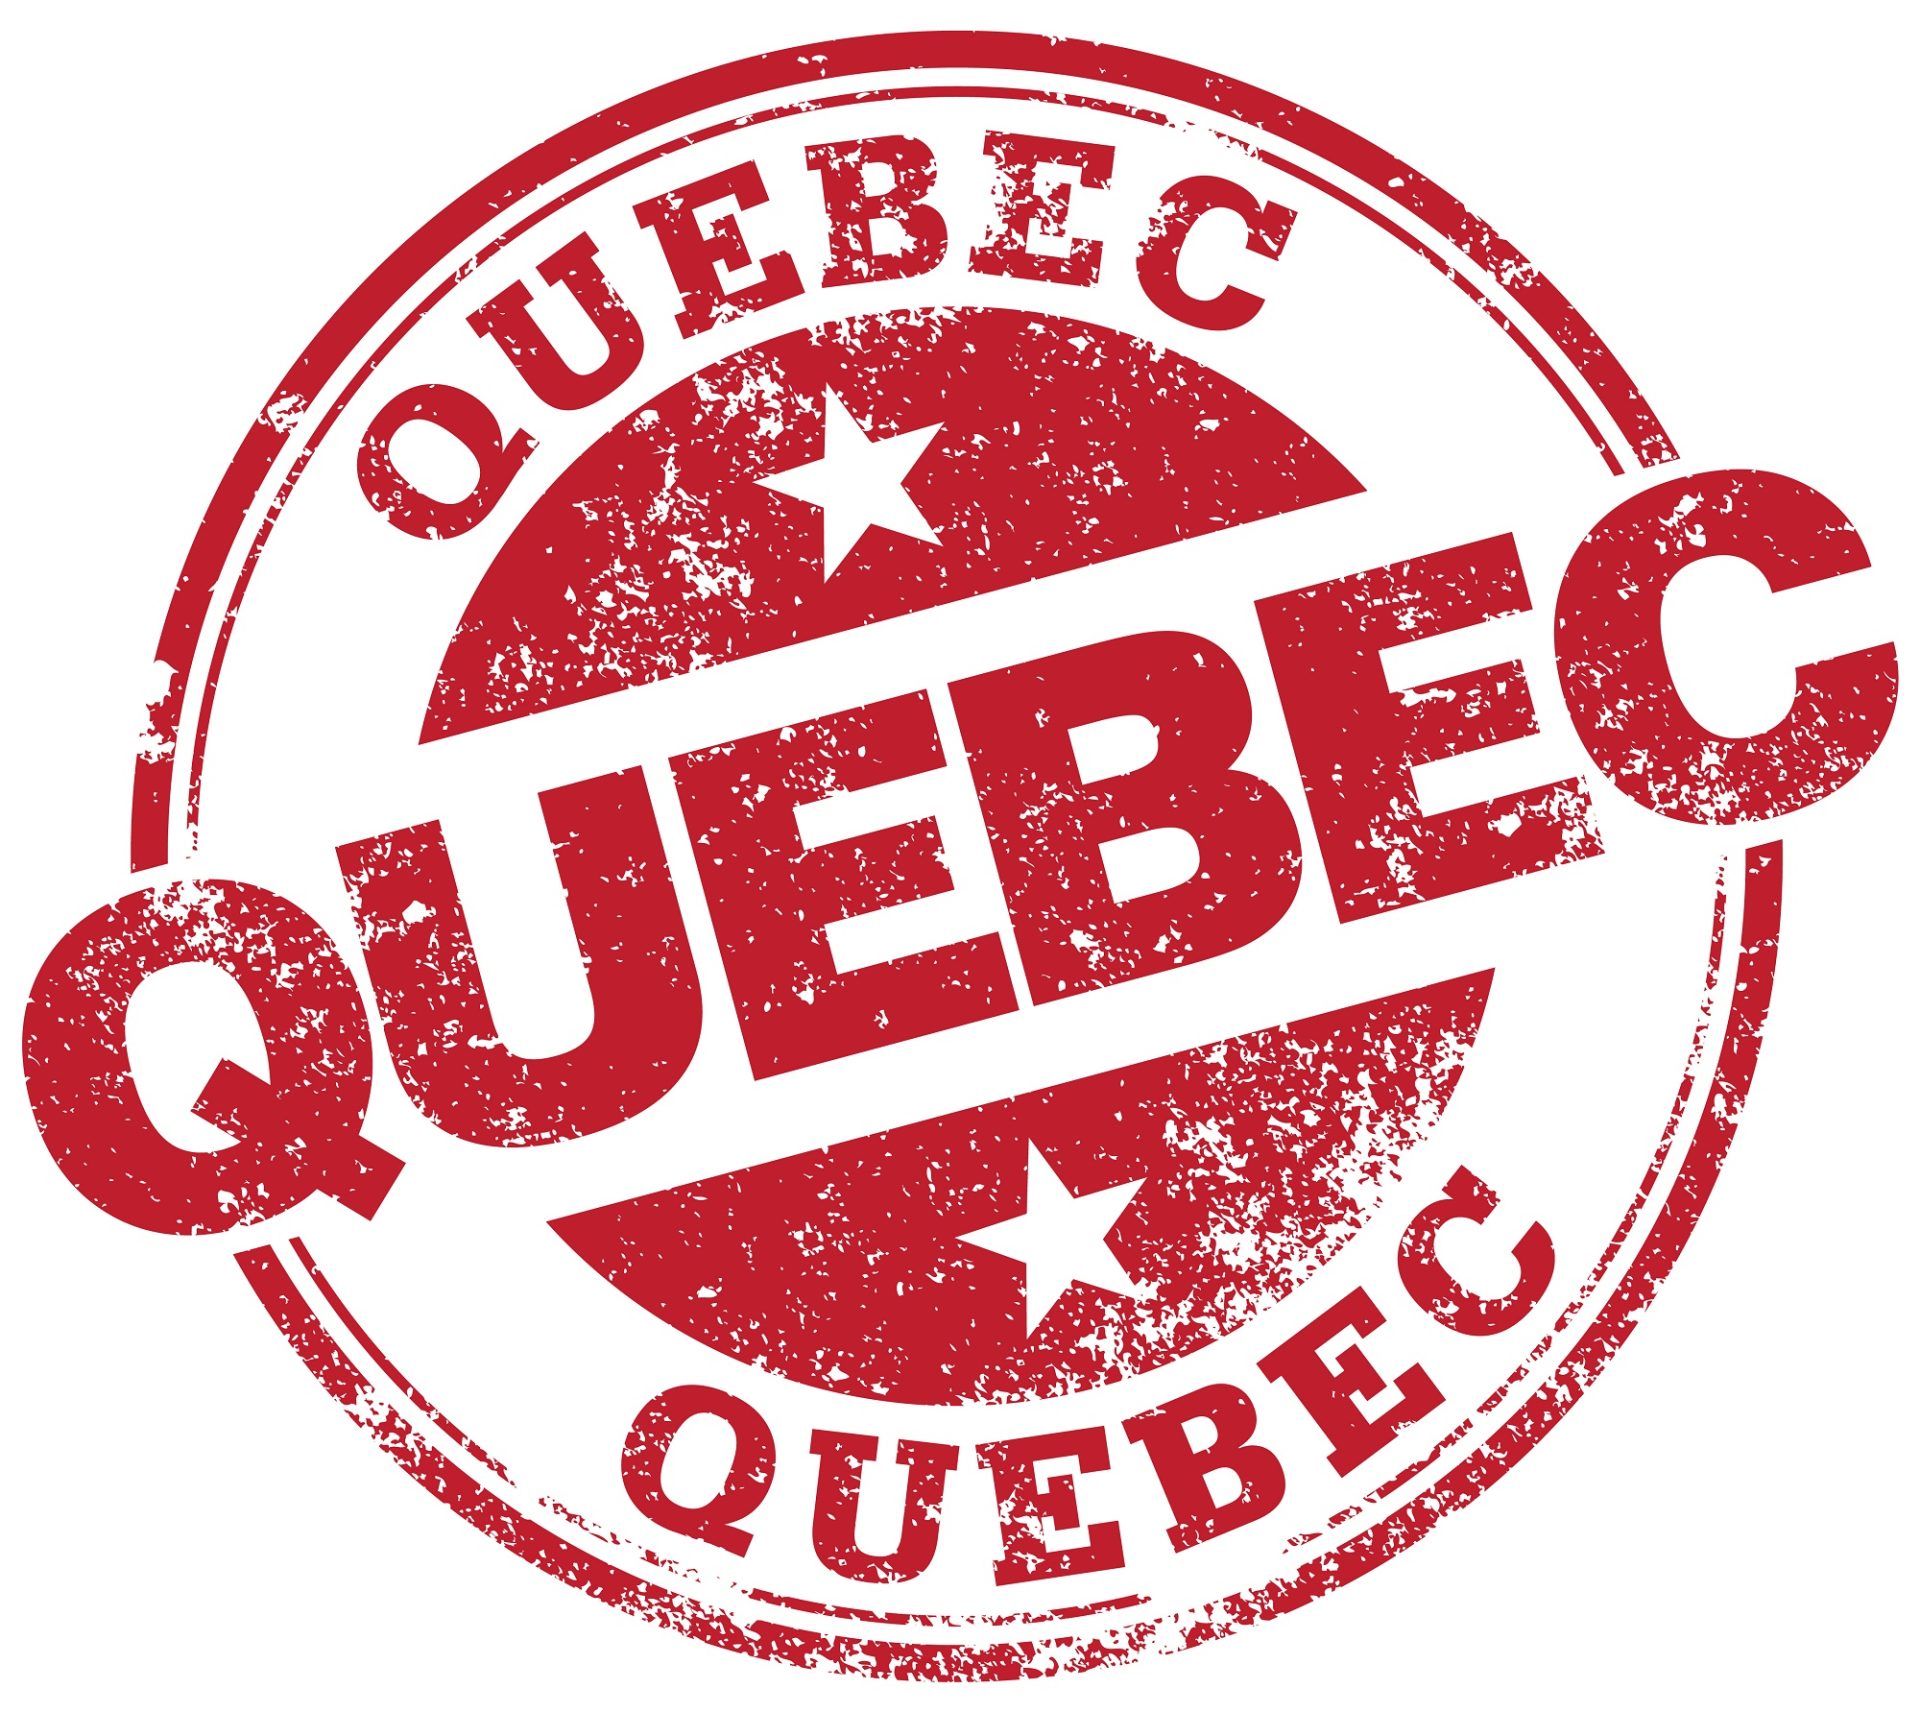 Quebec Visa